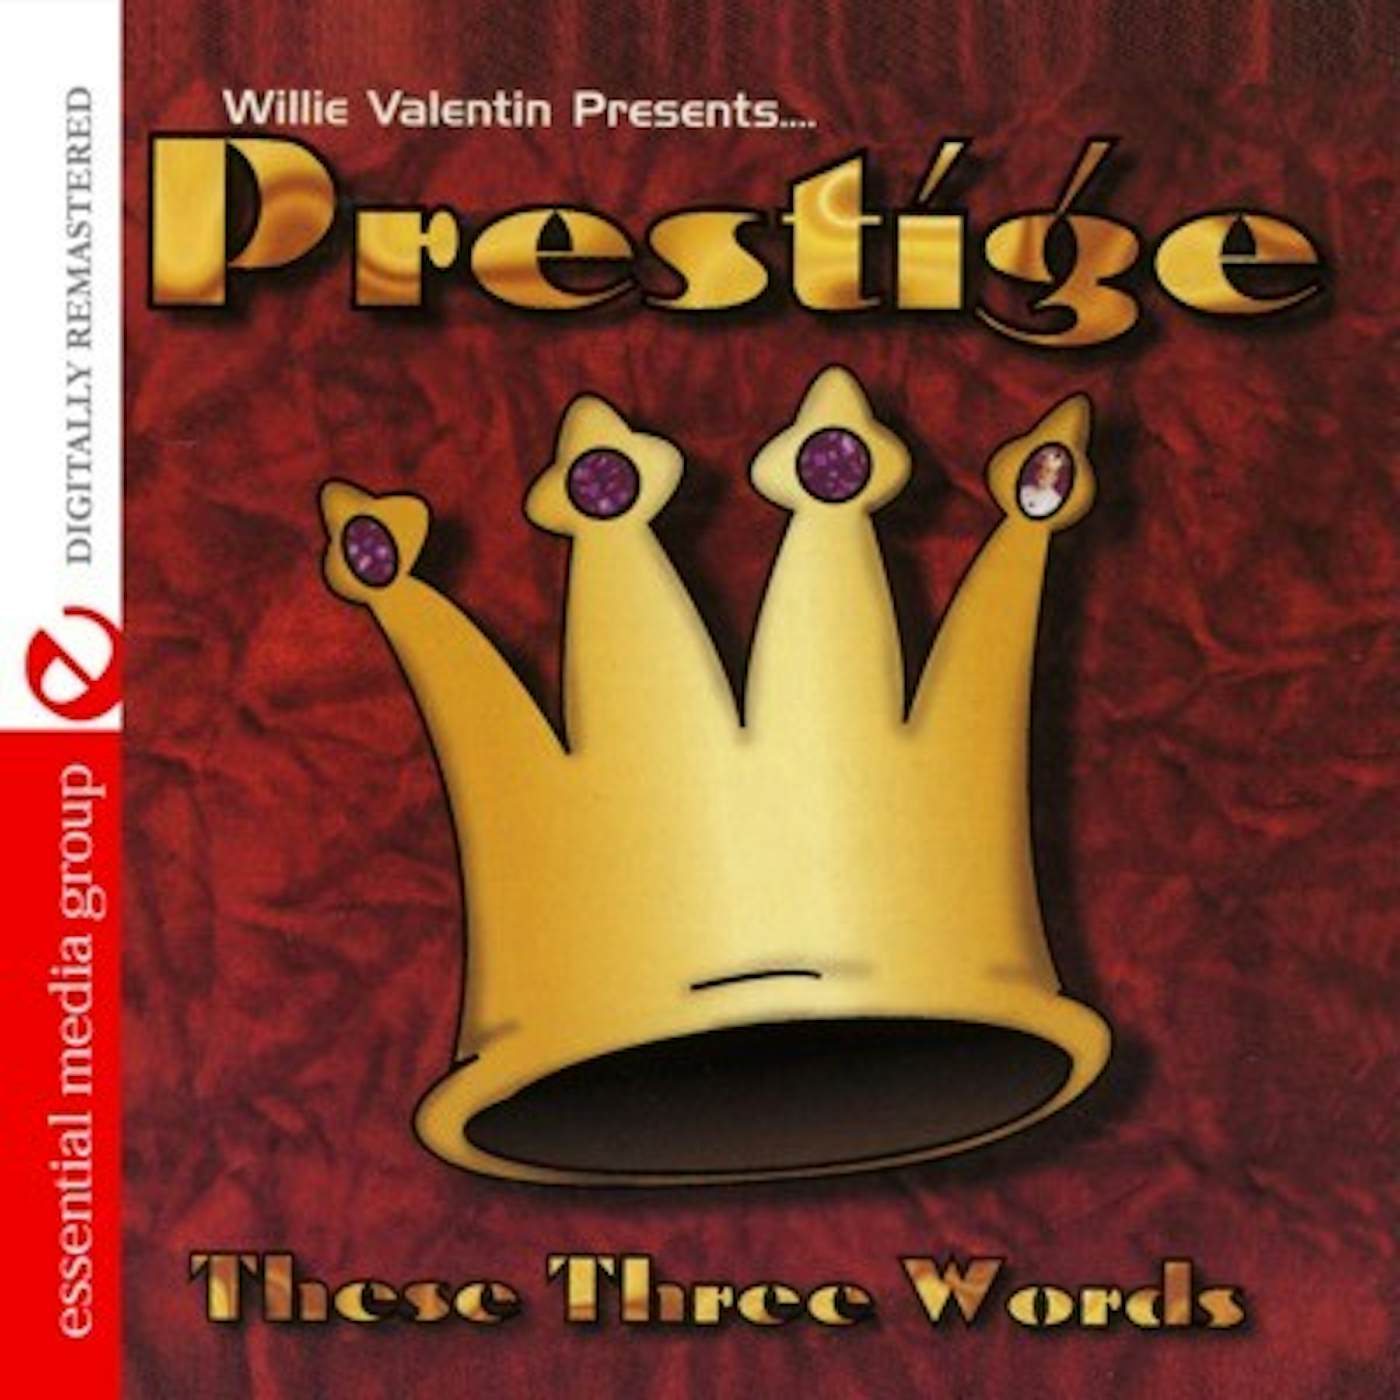 Prestige THESE THREE WORDS CD